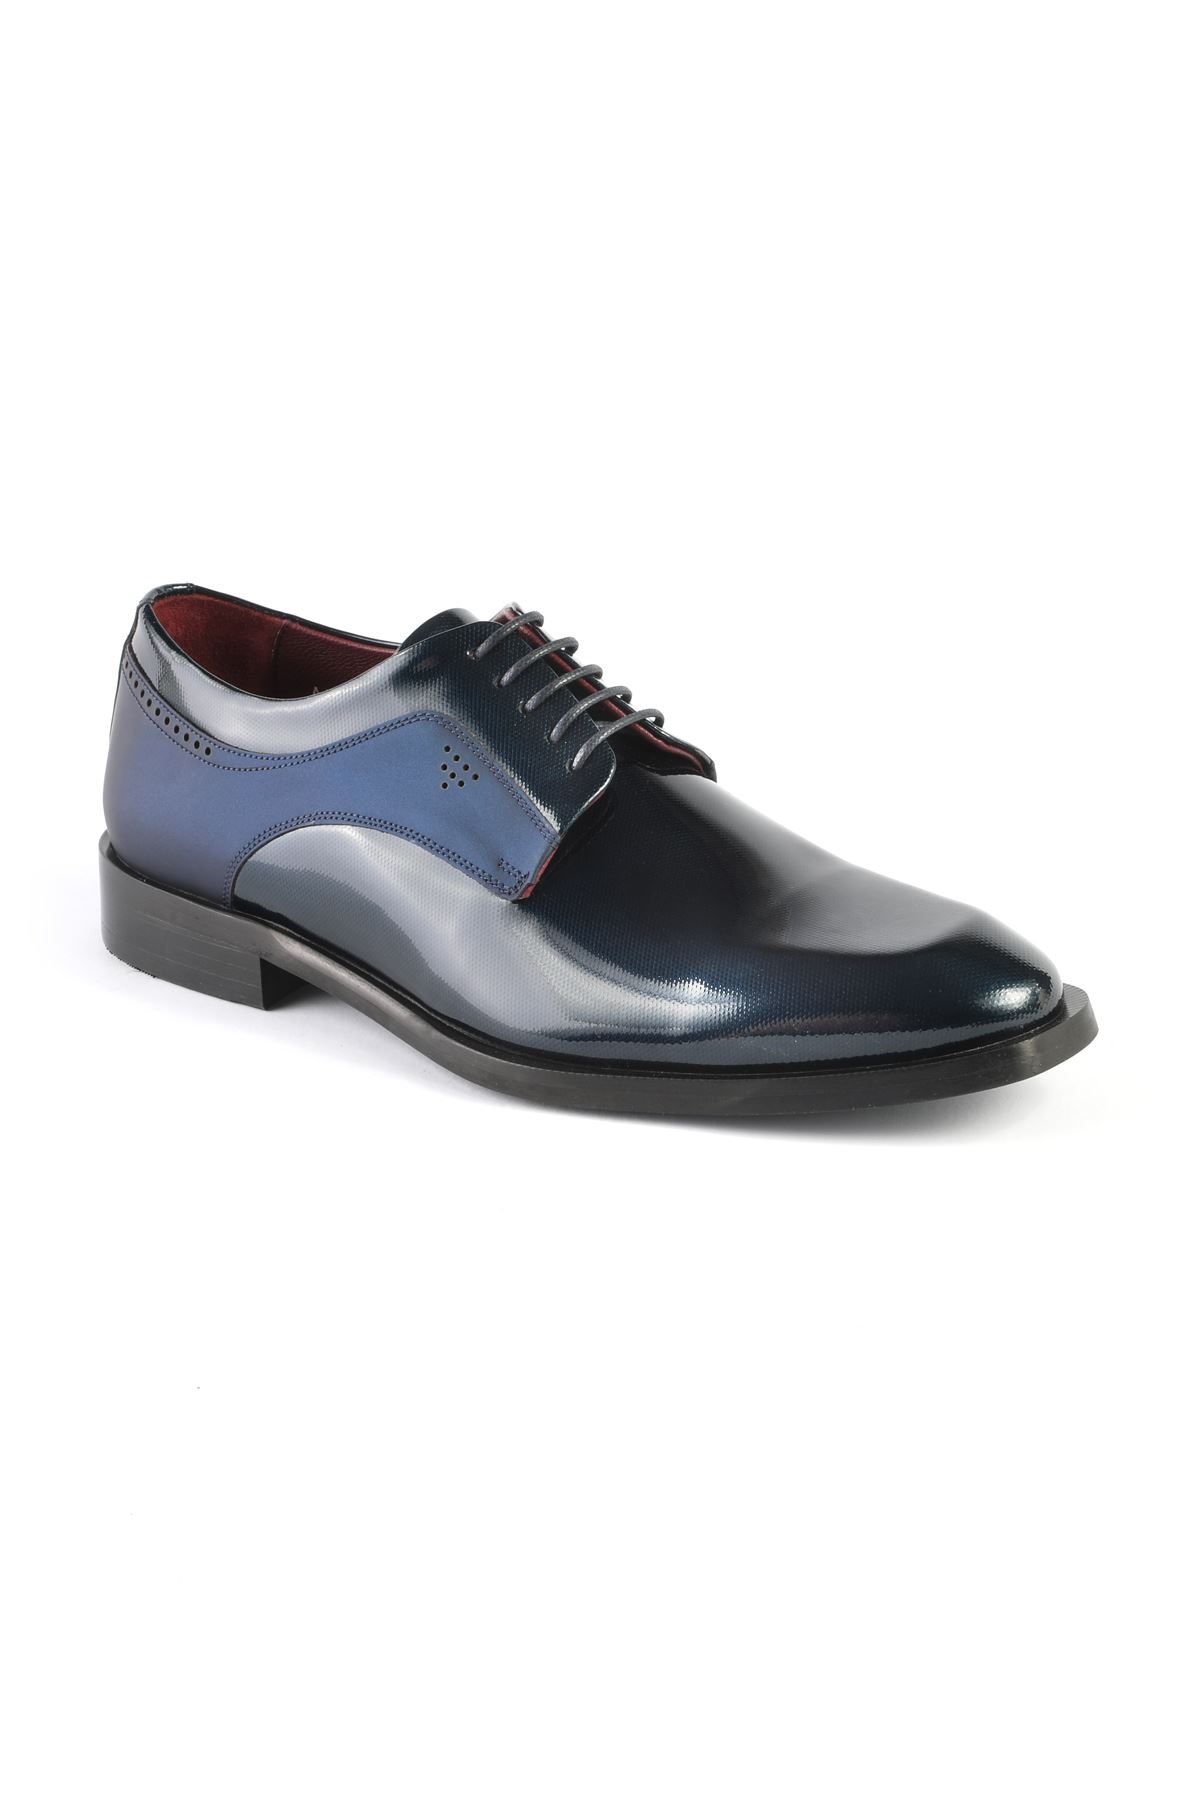 Libero L3252 Navy Blue Classic Shoes